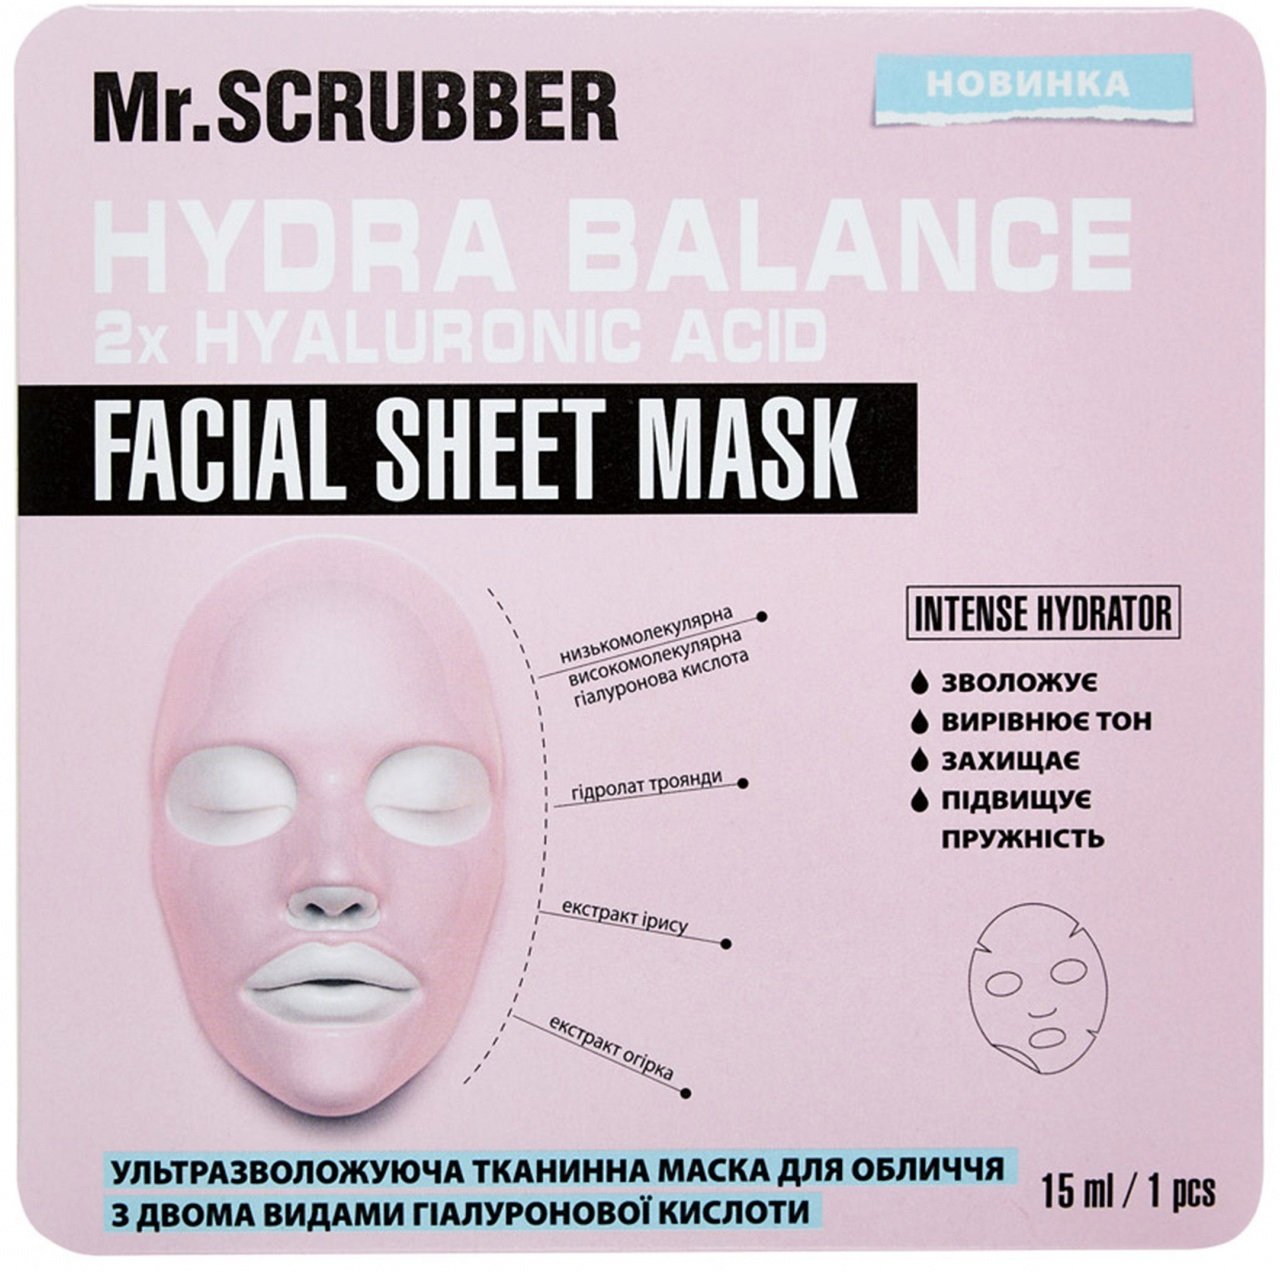 Ультраувлажняющая тканевая маска для лица Mr.Scrubber Hydra balance Facial Sheet Mask, 15 мл - фото 1